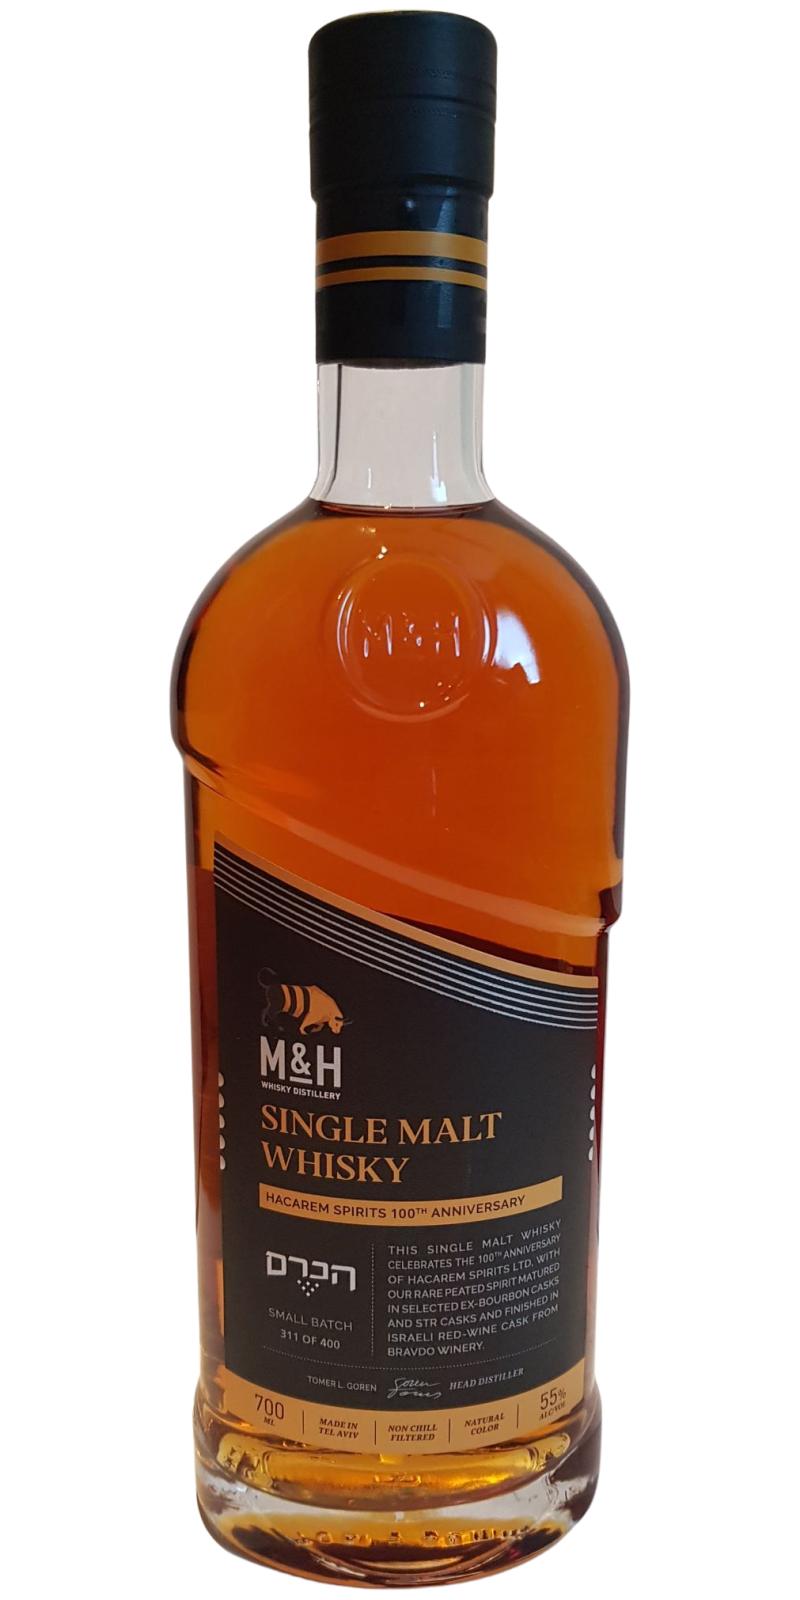 M&H Single Malt Whisky Small Batch Israeli Red Wine Hacarem Spirits 100th Anniversary 55% 700ml